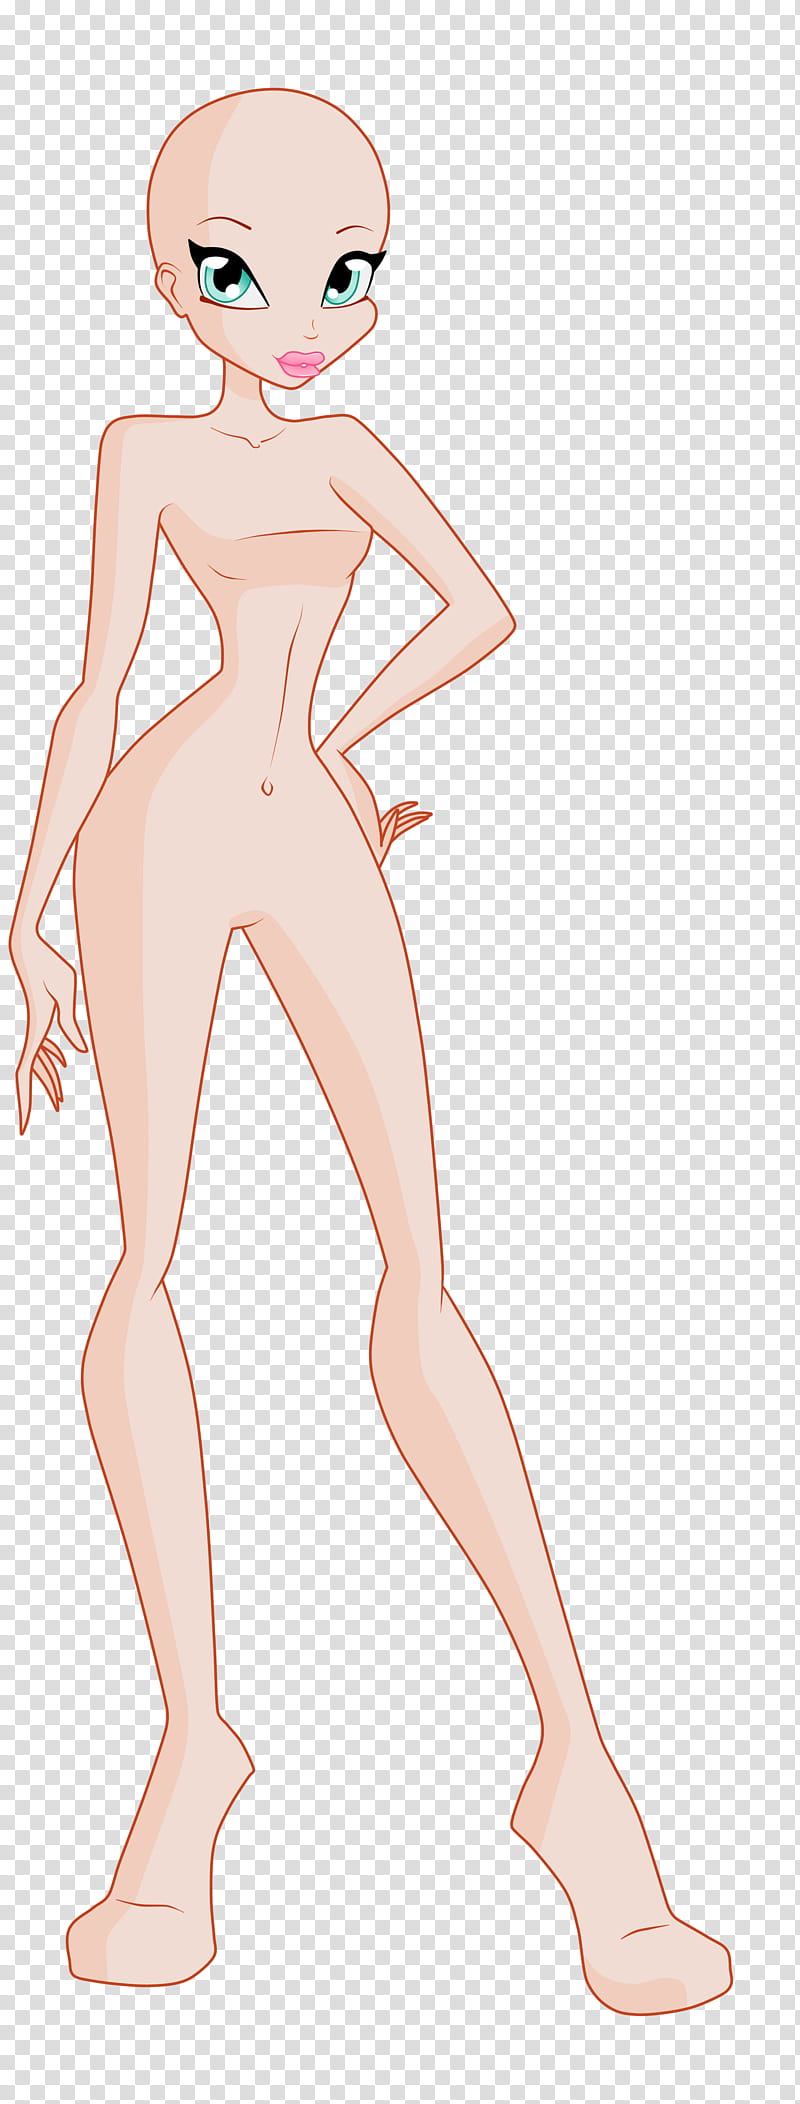 800px x 2104px - Winx Club sirenix Base , naked woman illustration ...